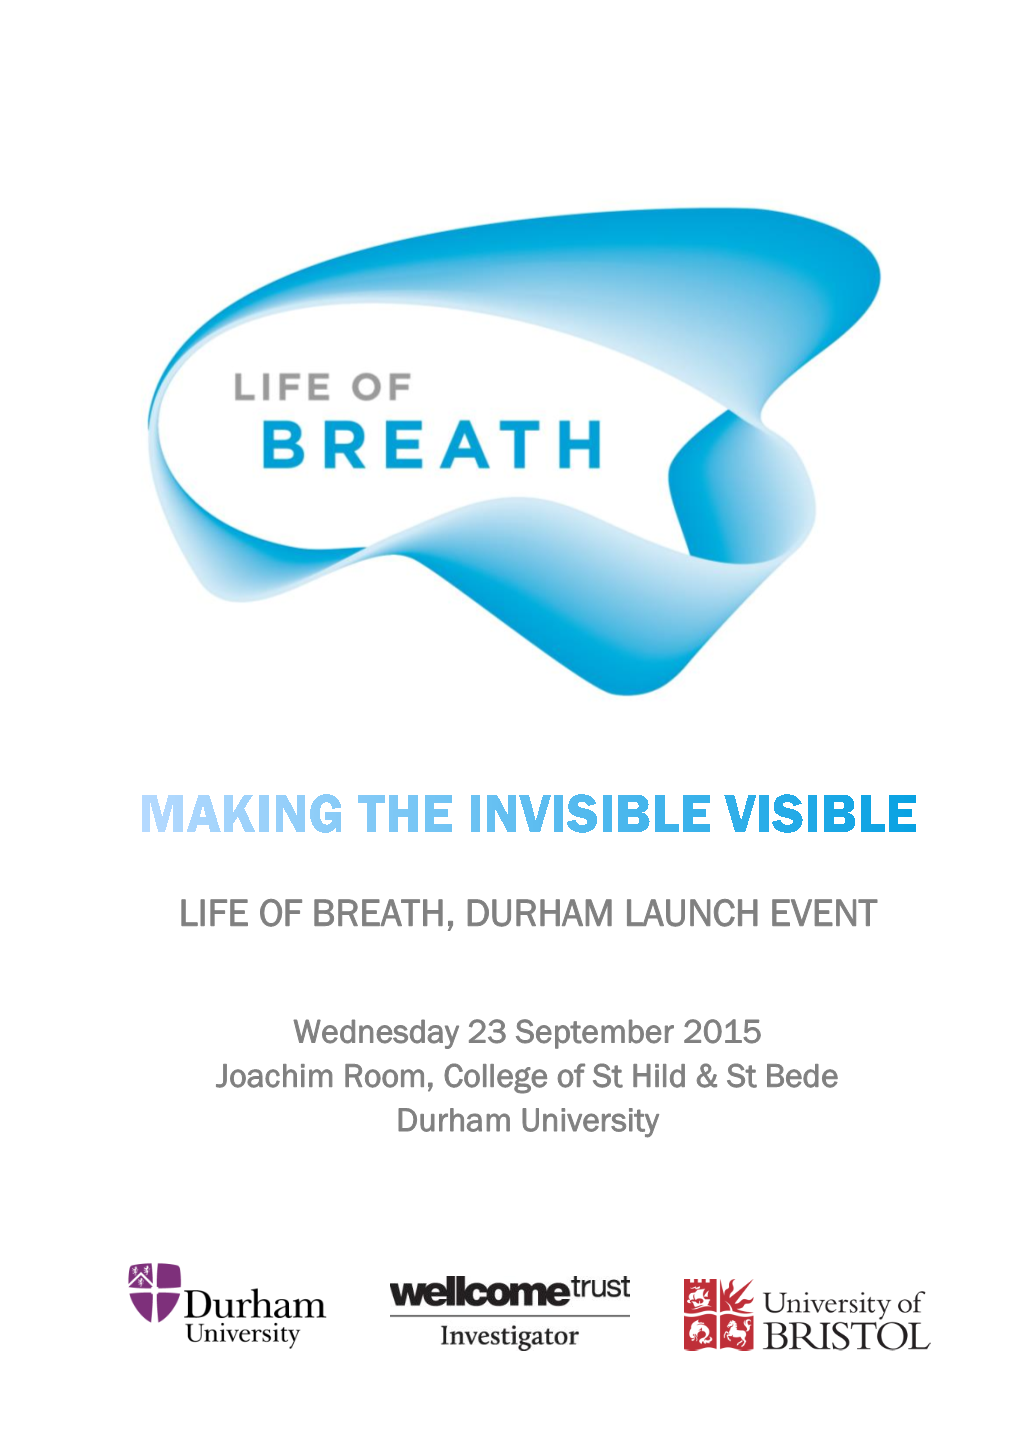 Life of Breath, Durham Launch Event